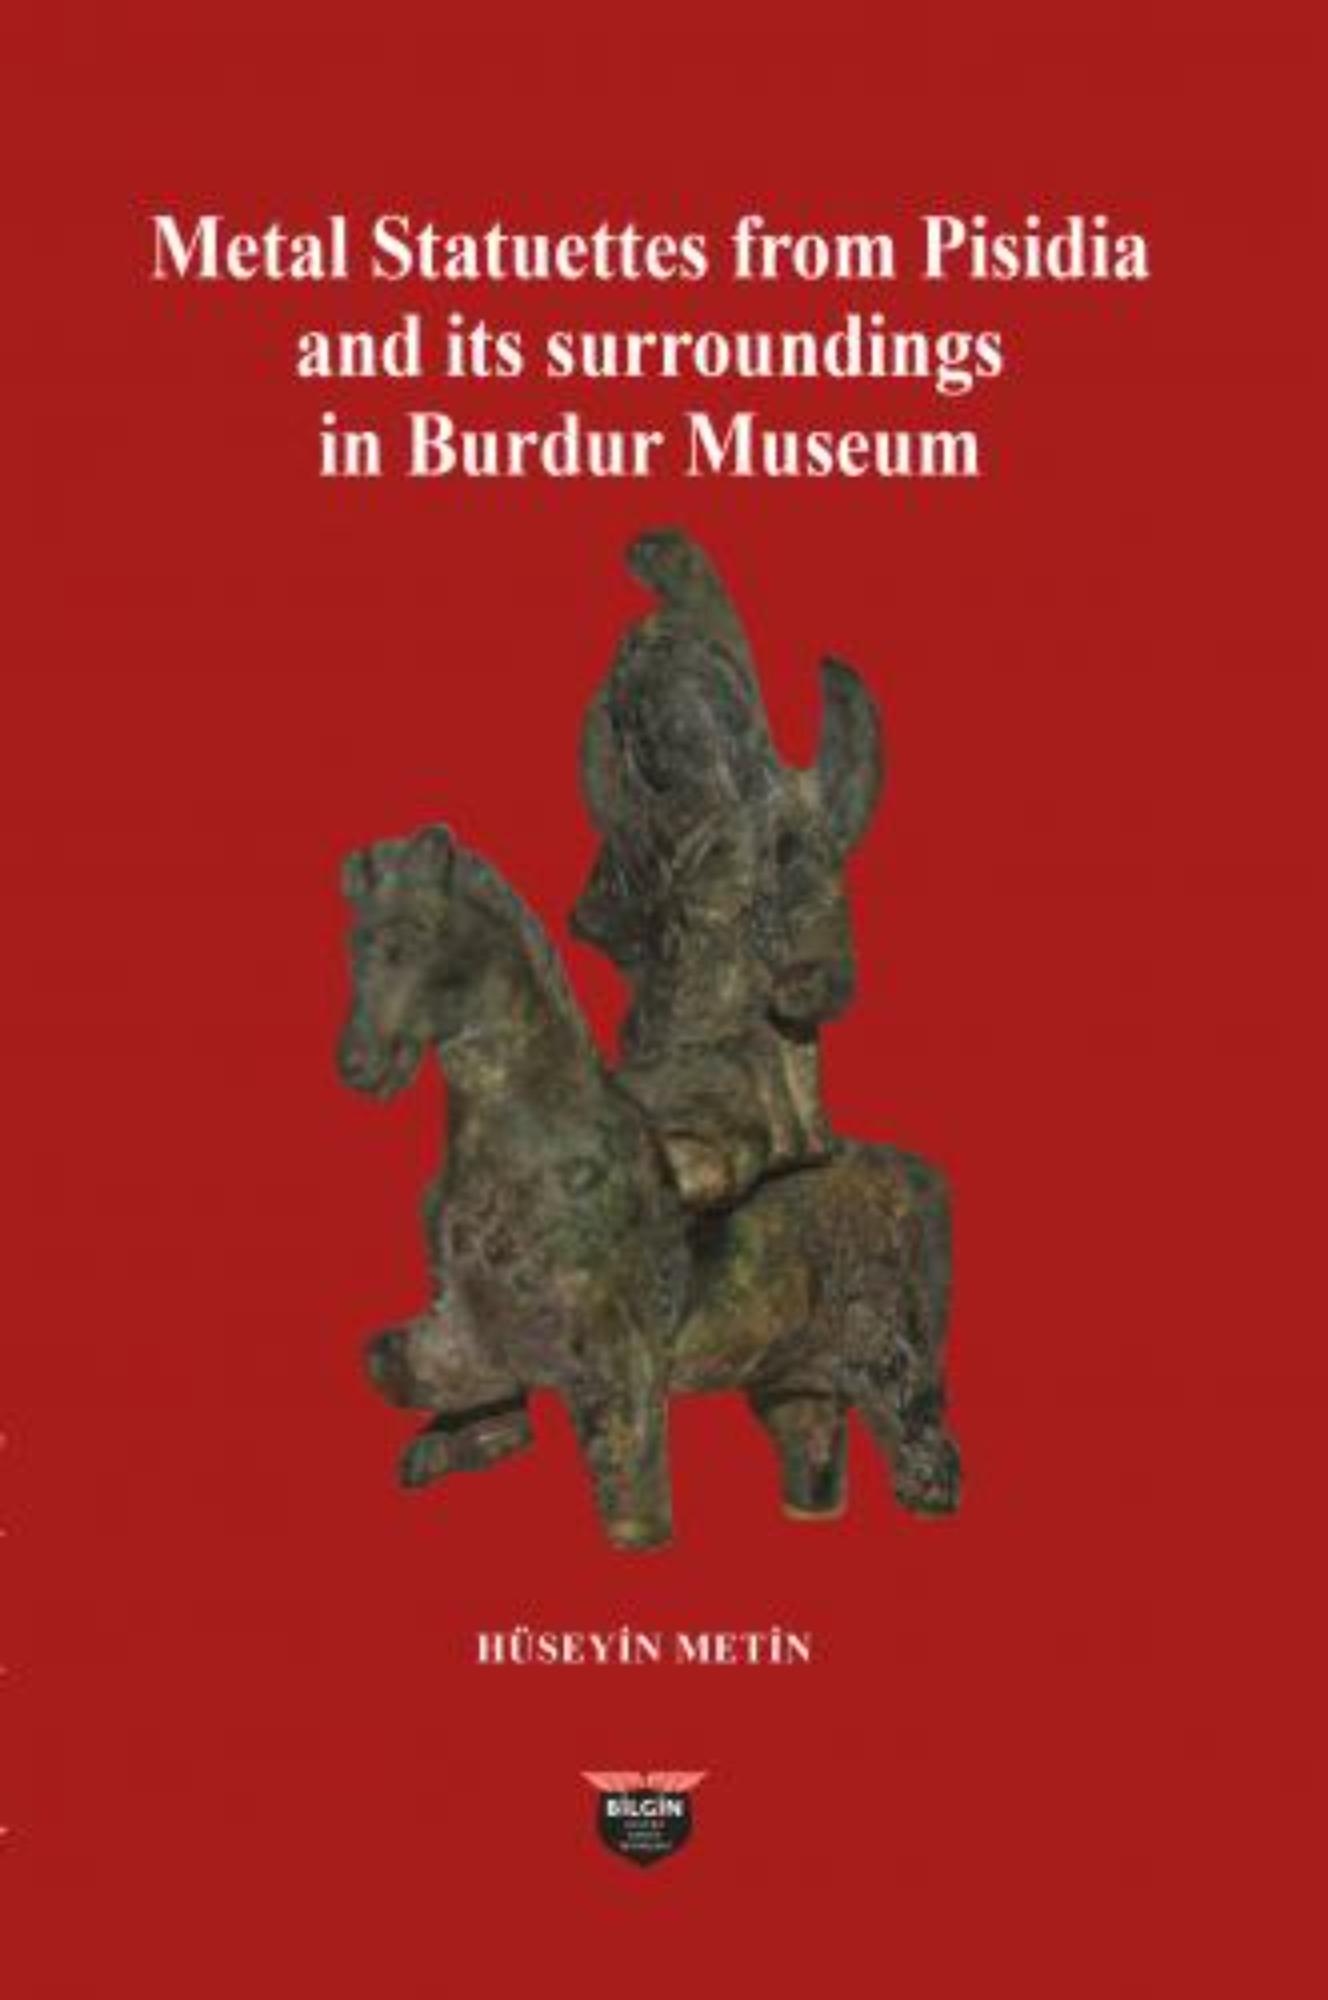 Metin, Hüseyin; Metal Statuettes from Pisidia and its Surrondings in Burdur Museum